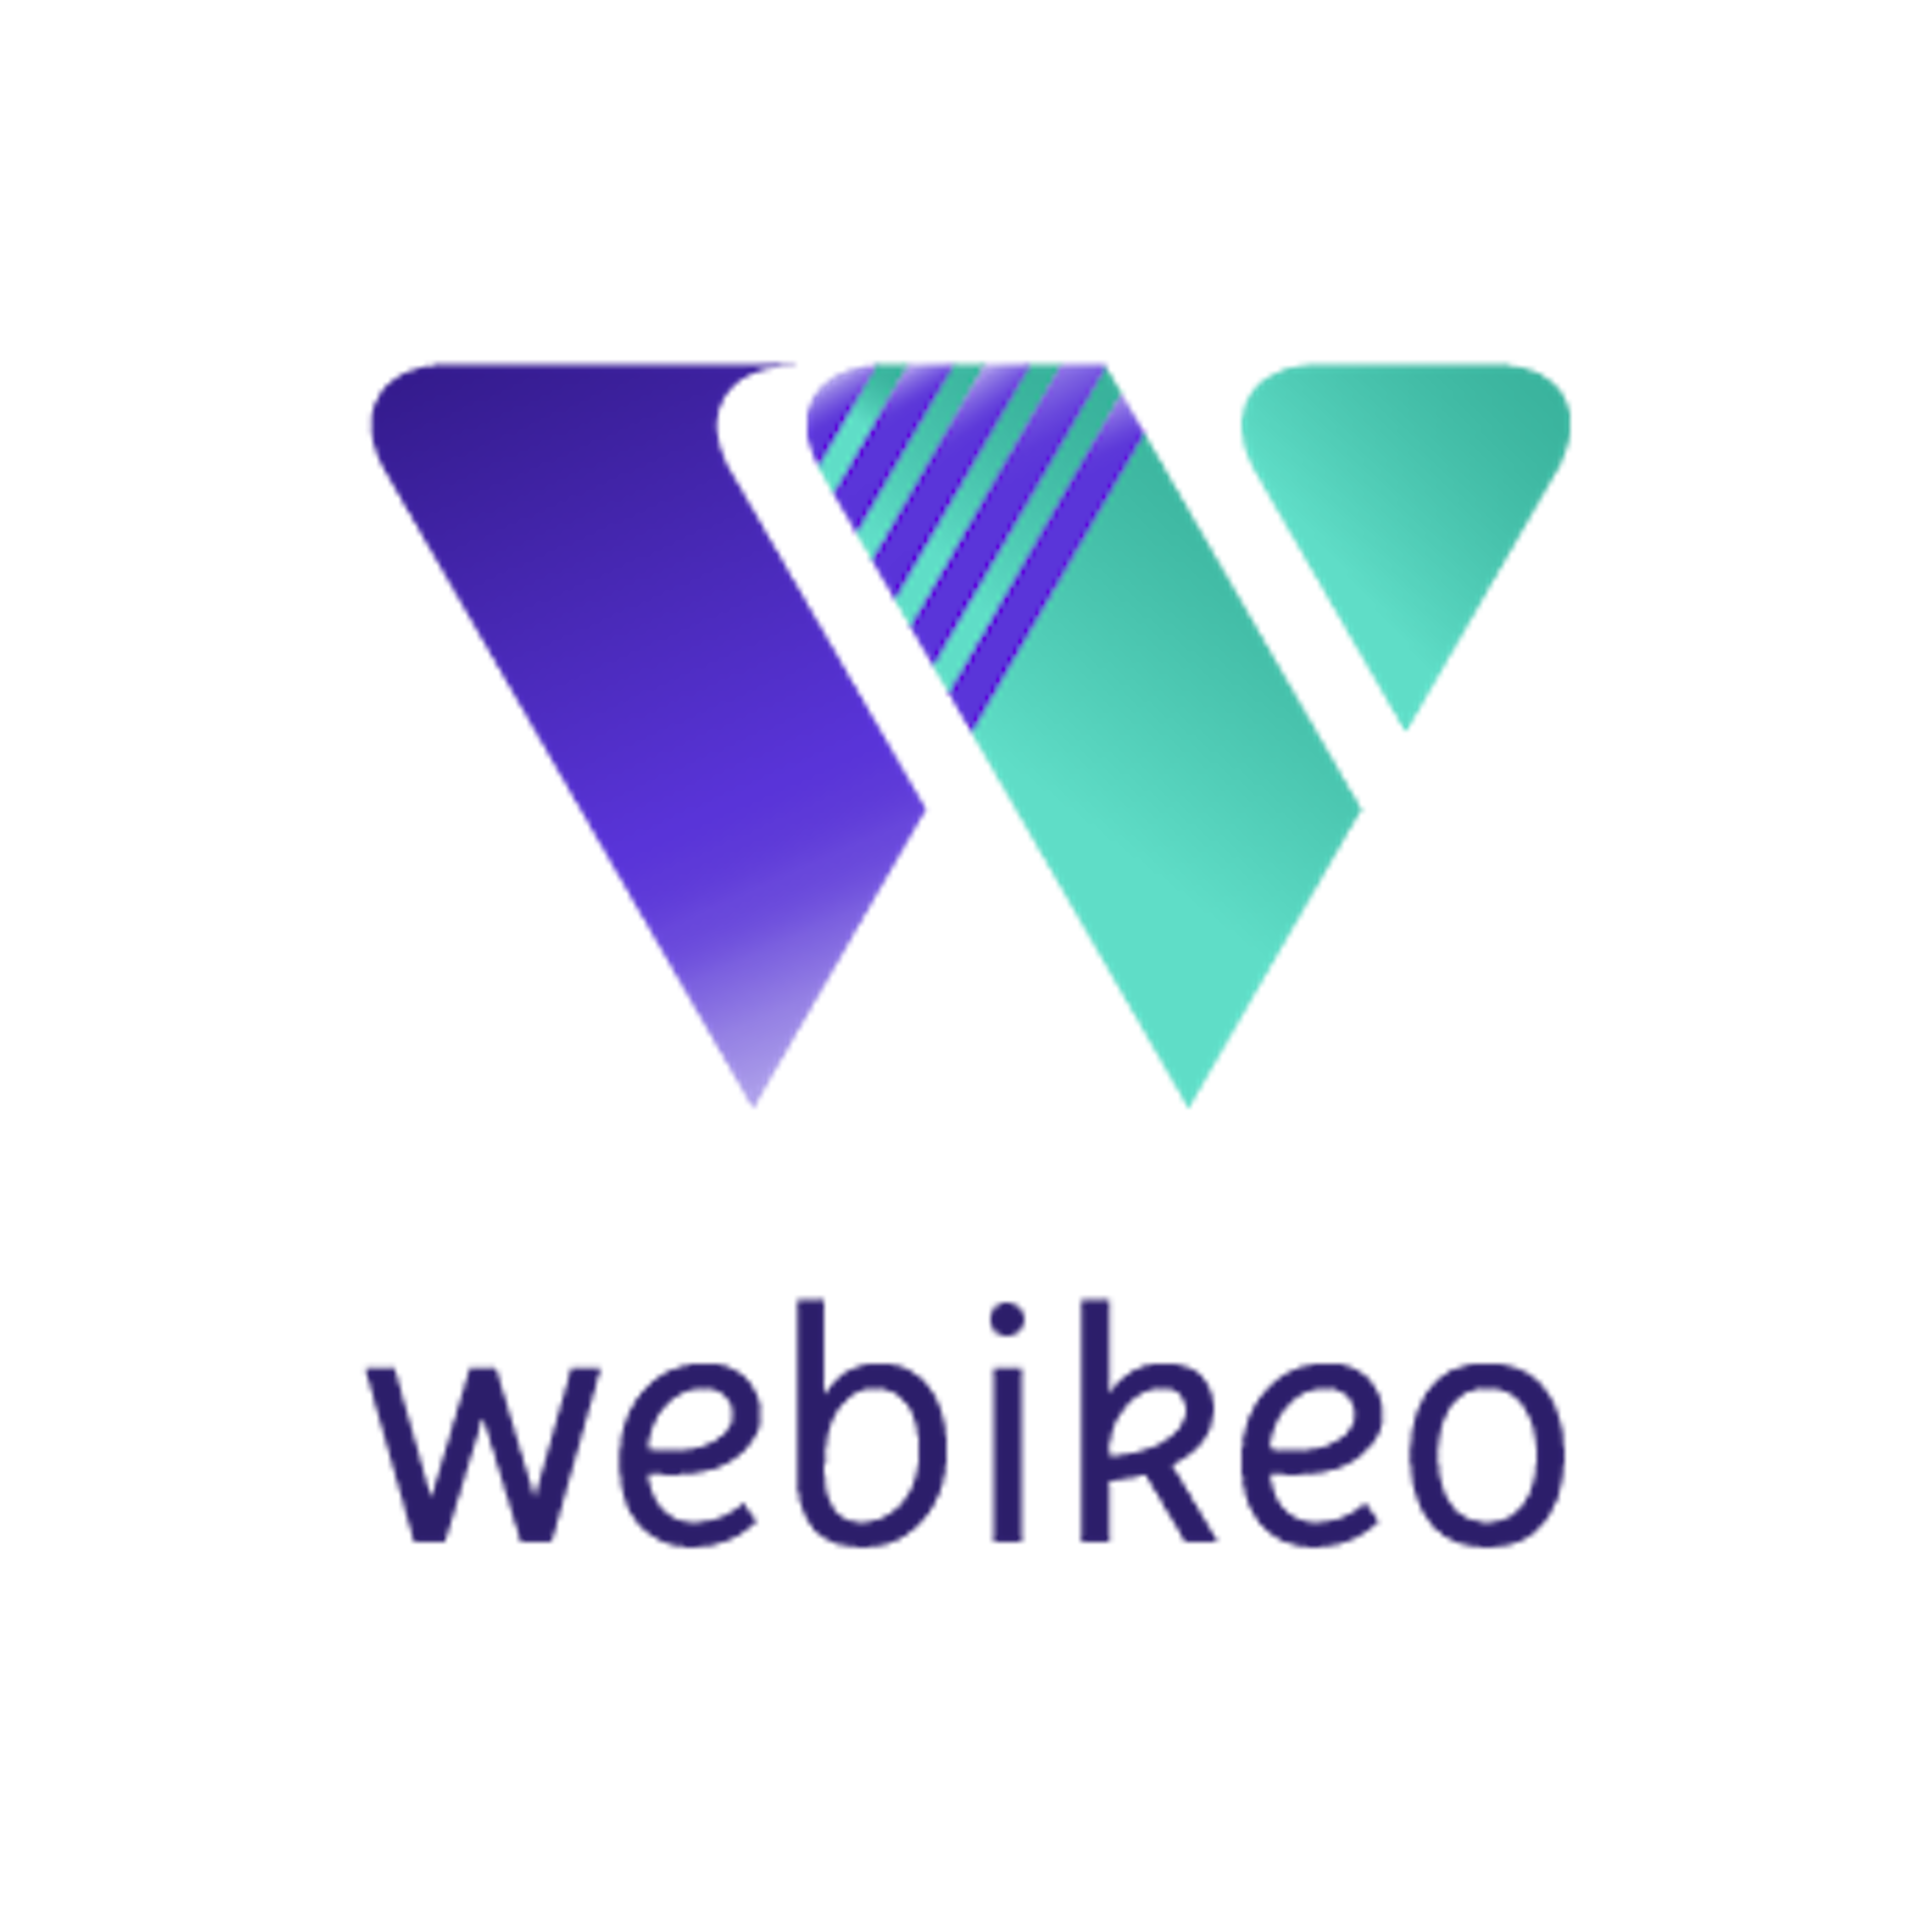 Webikeo Logo